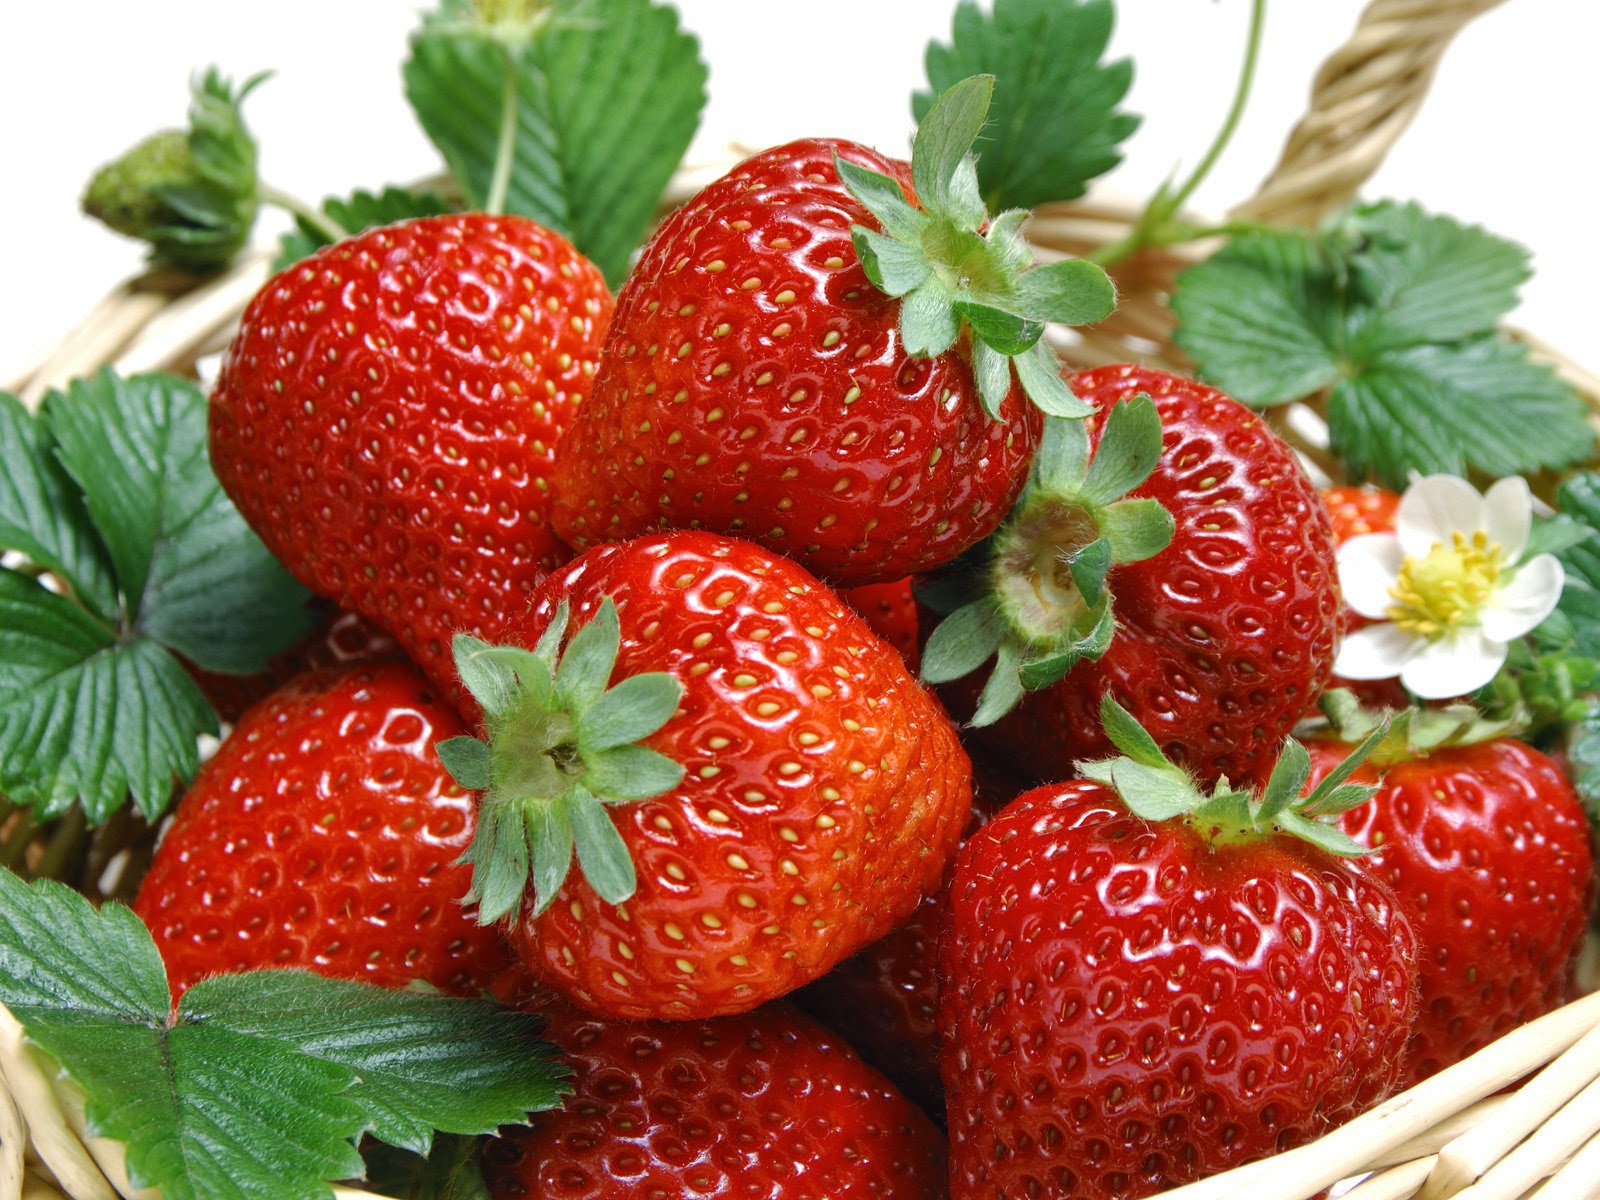  Gambar Buah Strawberry  Merah Segar Aku Buah  Sehat